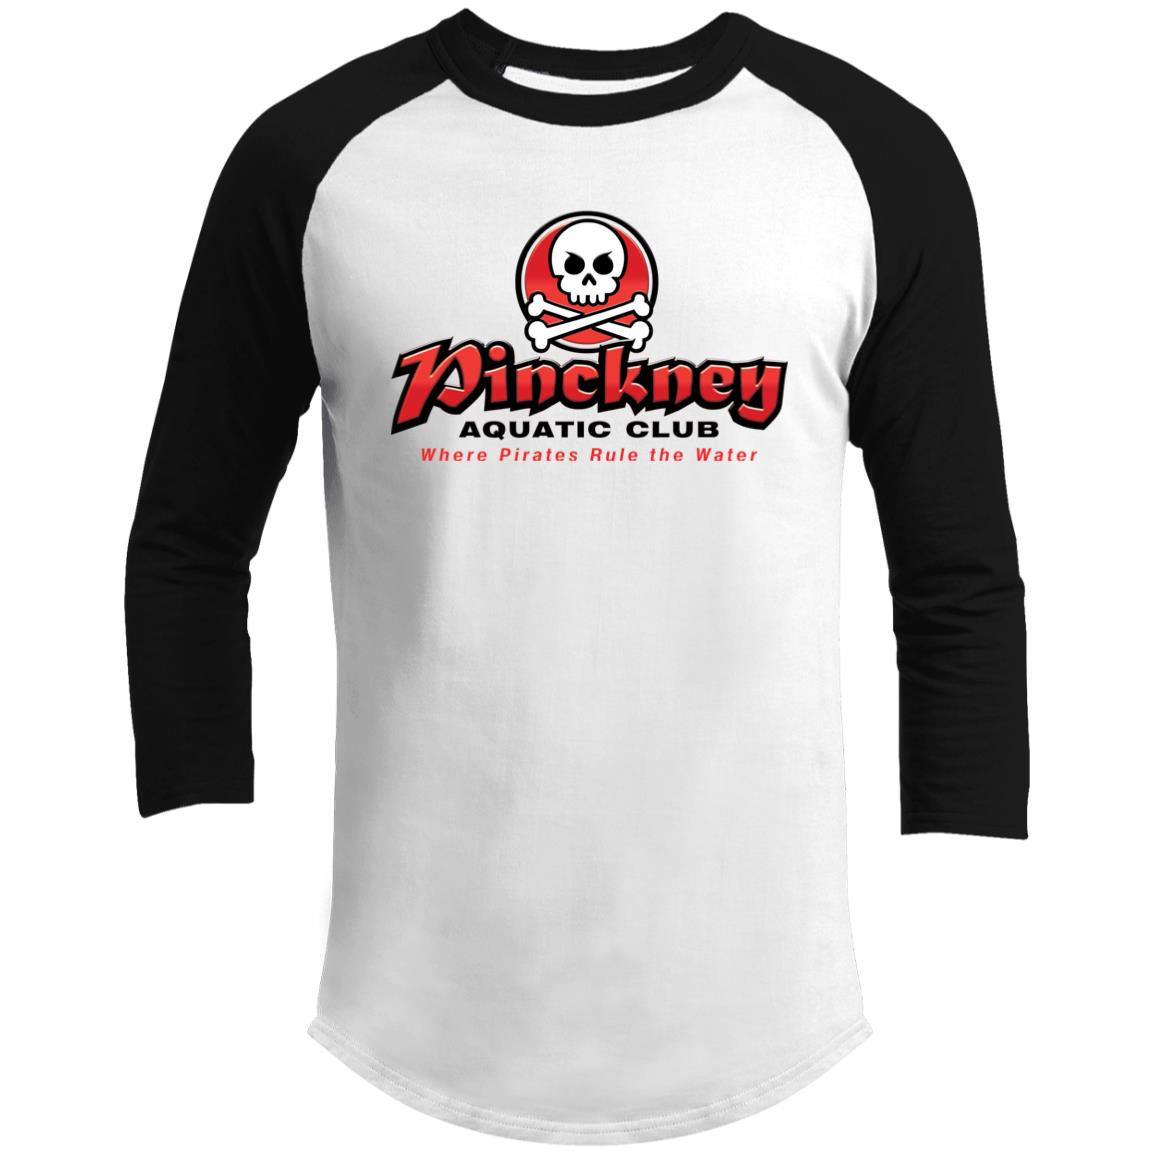 Pinckney Aquatic Club - B, W & R, T200 3/4 Raglan Sleeve Shirt